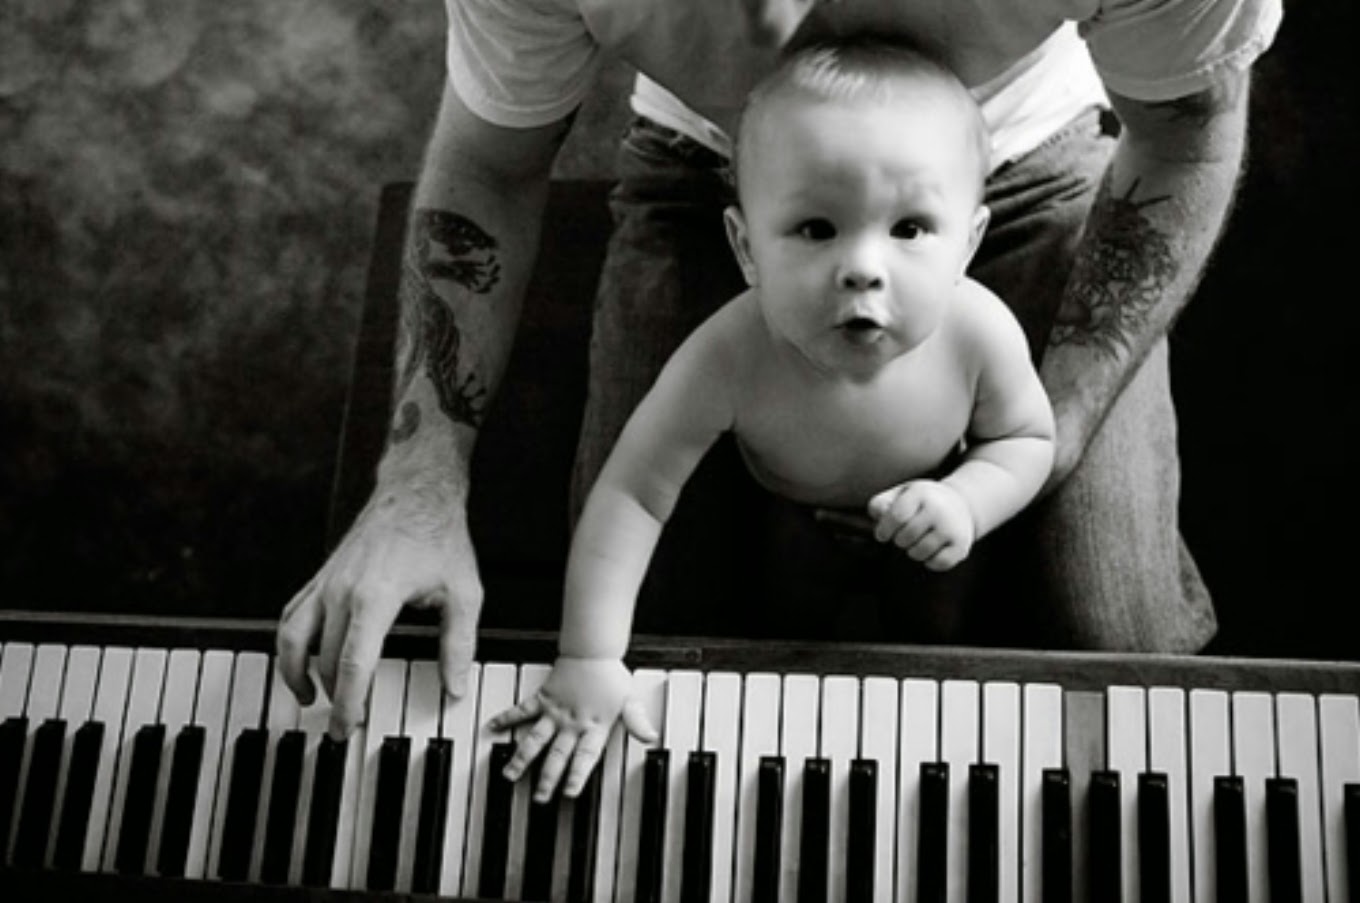 Музыка папа даст. Музыканты музыканты для детей. Родители музыкантов. Родитель и ребёнок музыканты. Папа играет на пианино.